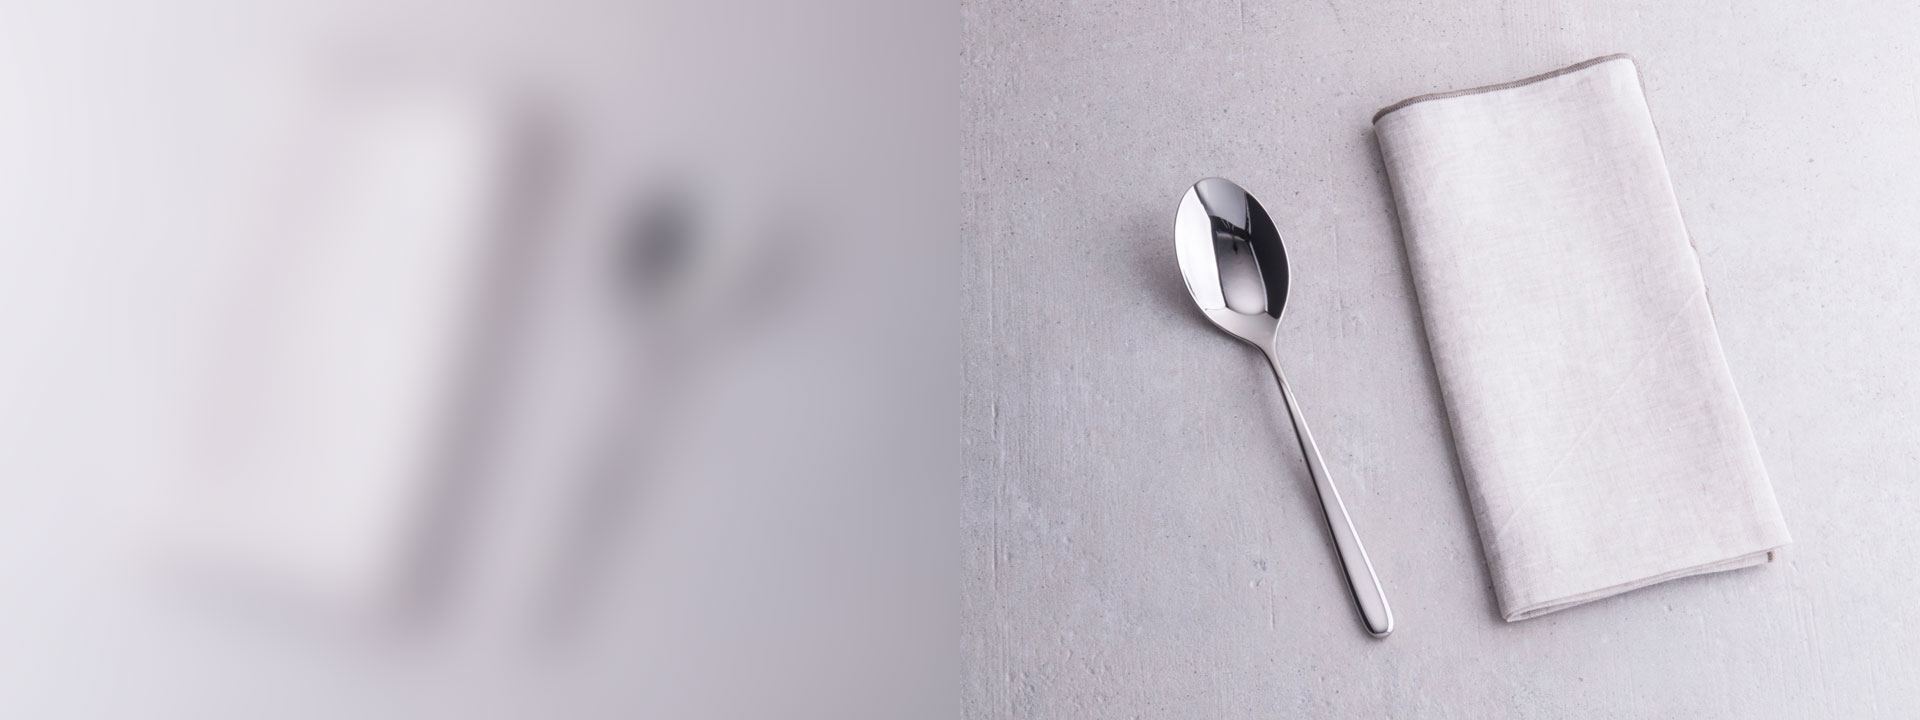 Bouillon spoons